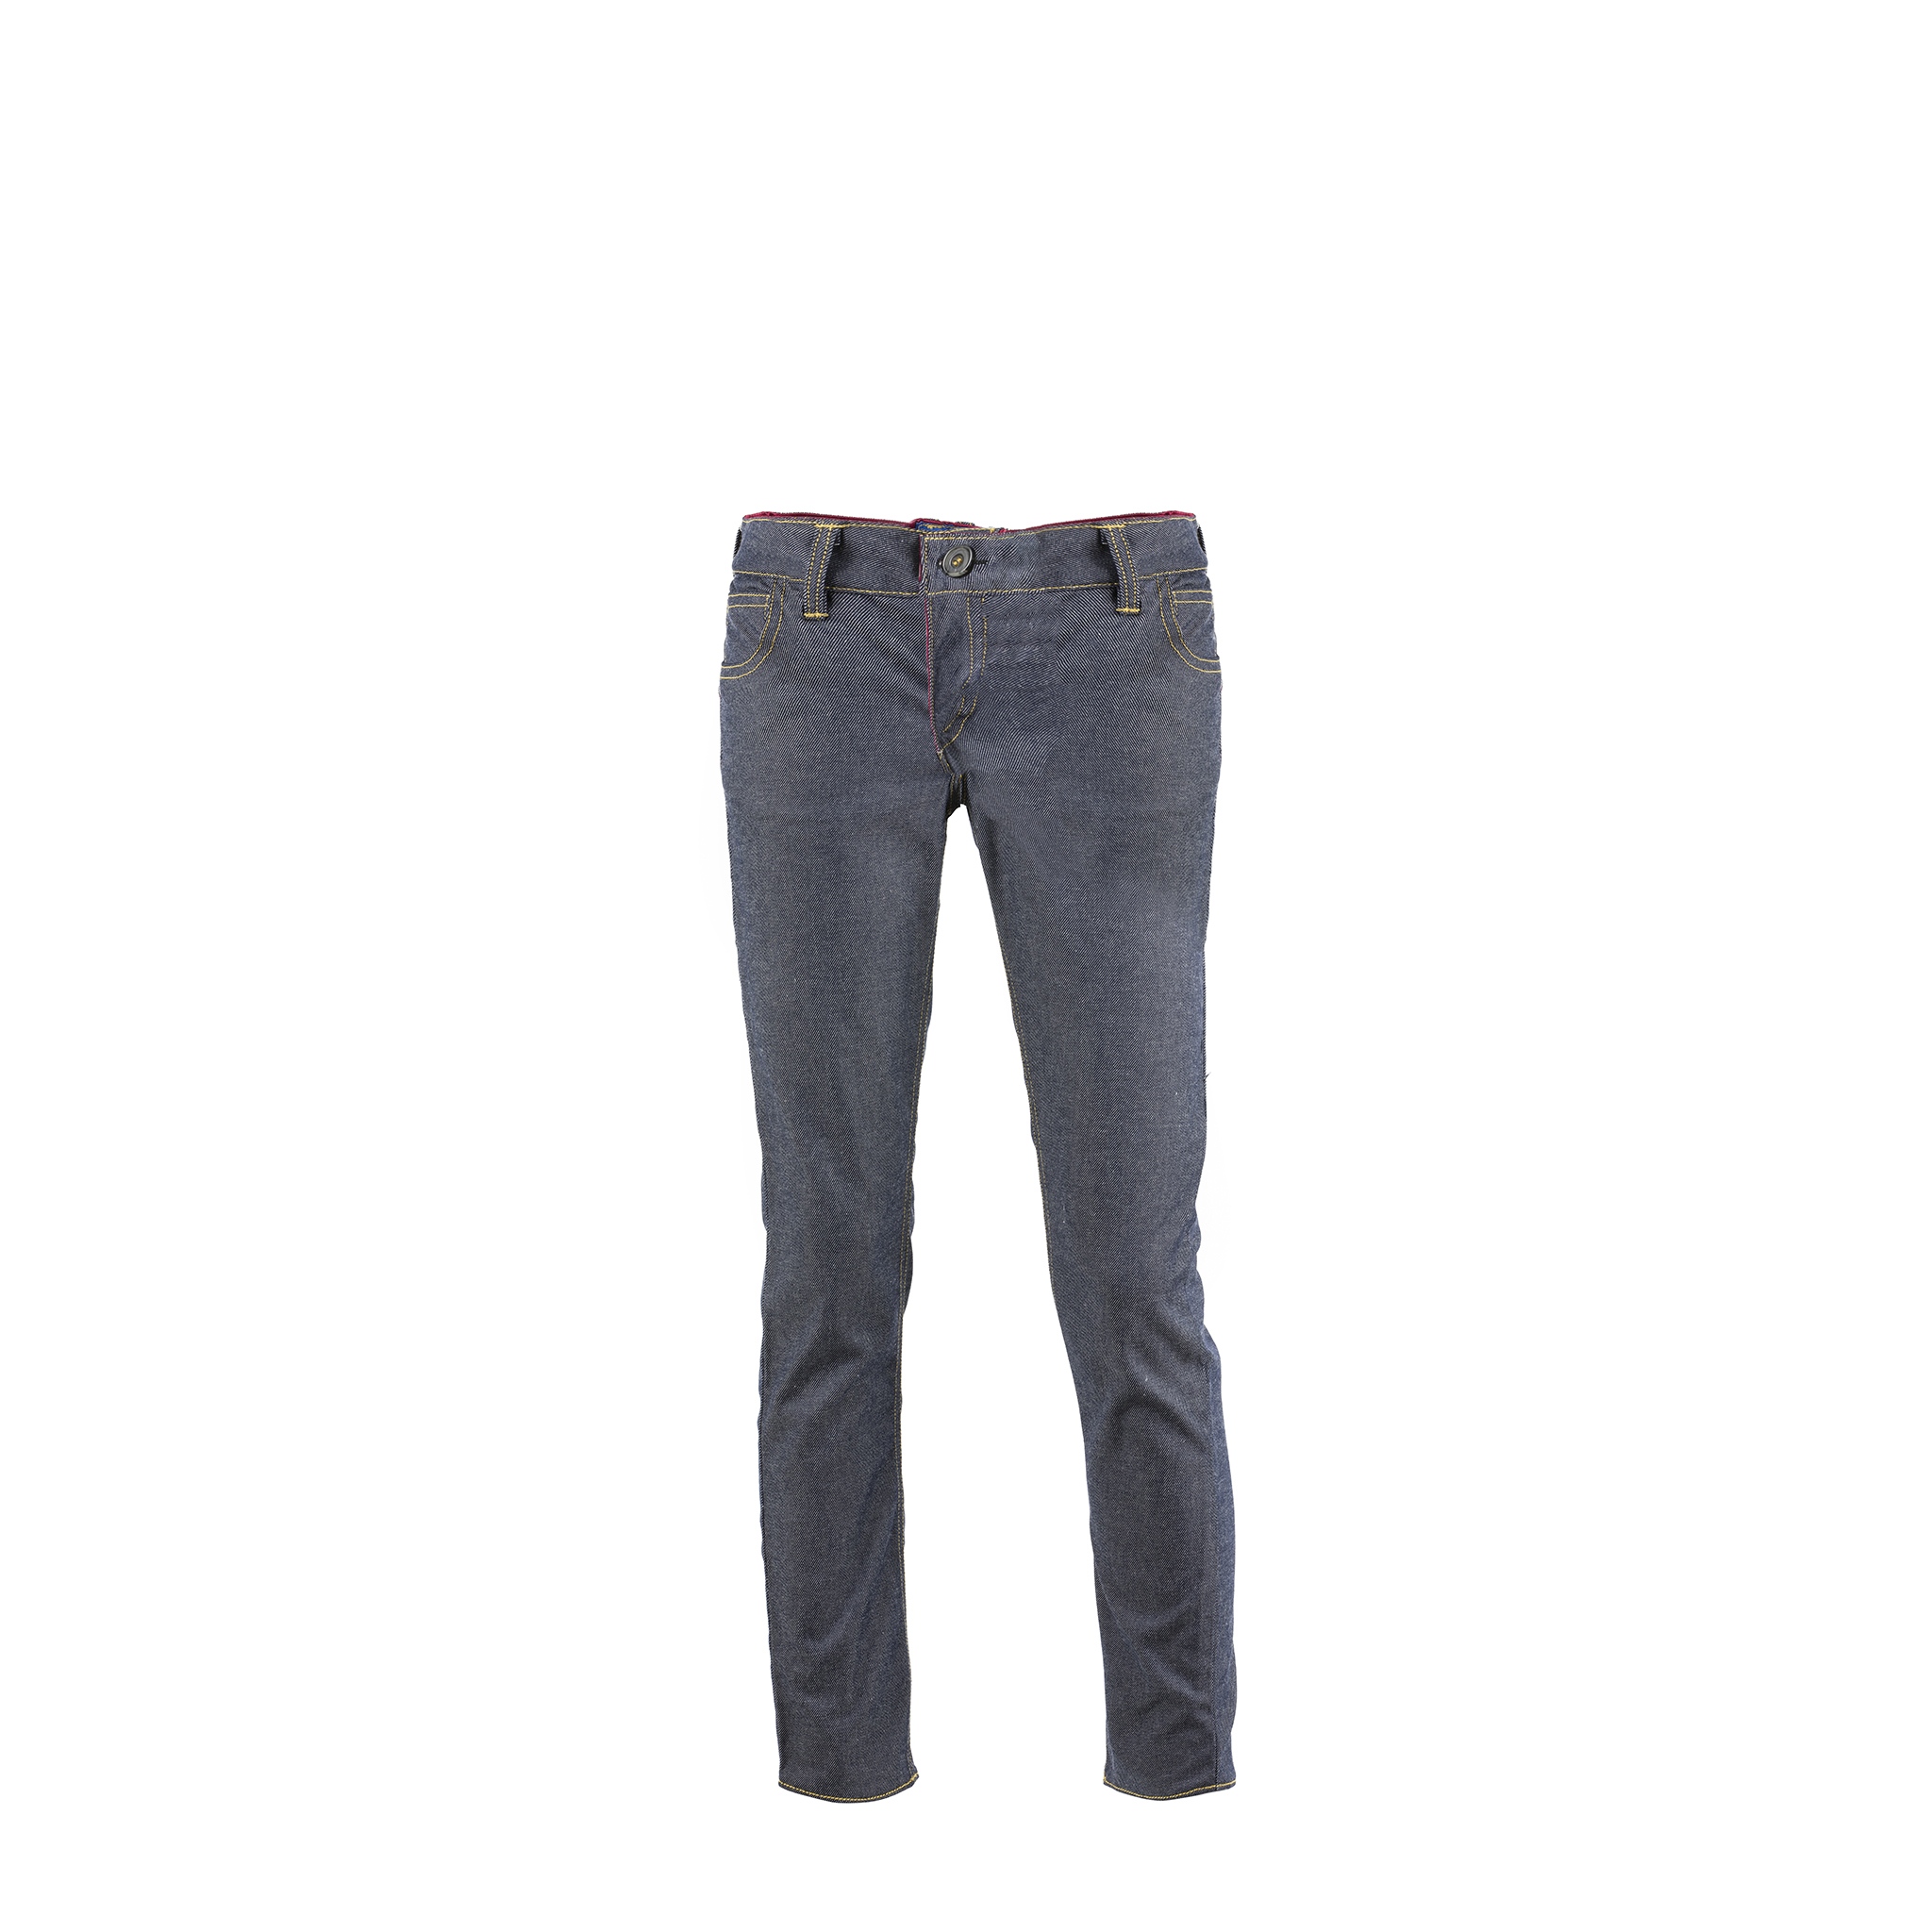 Jeans 2016F - Toile denim - Doublure rouge